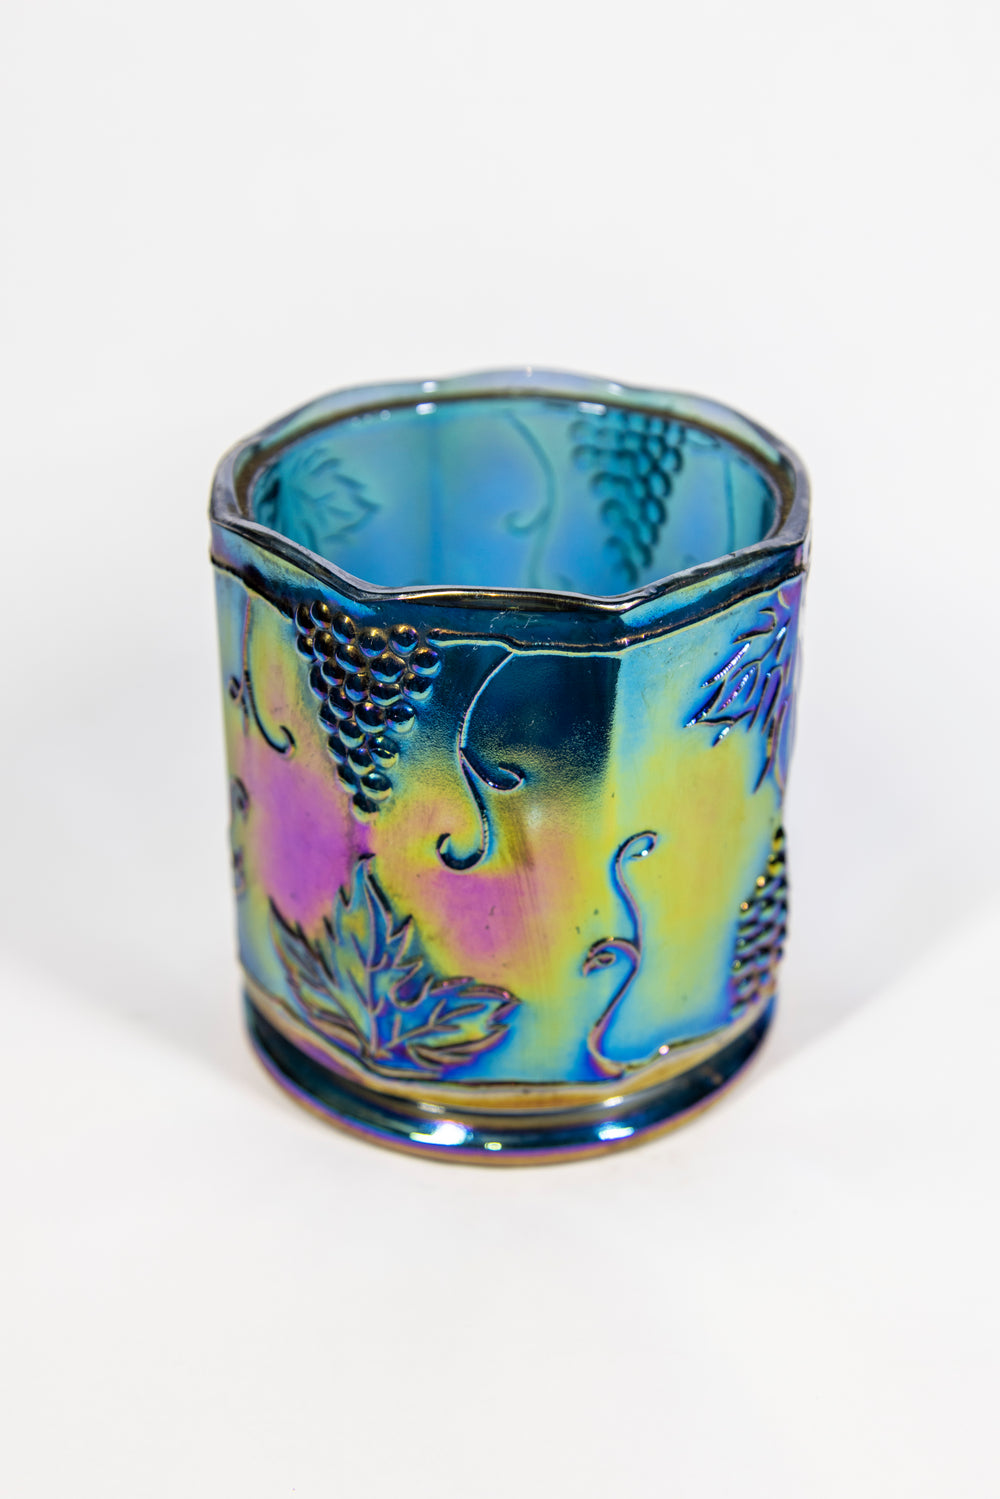 Vintage Blue Iridescent Carnival Glass